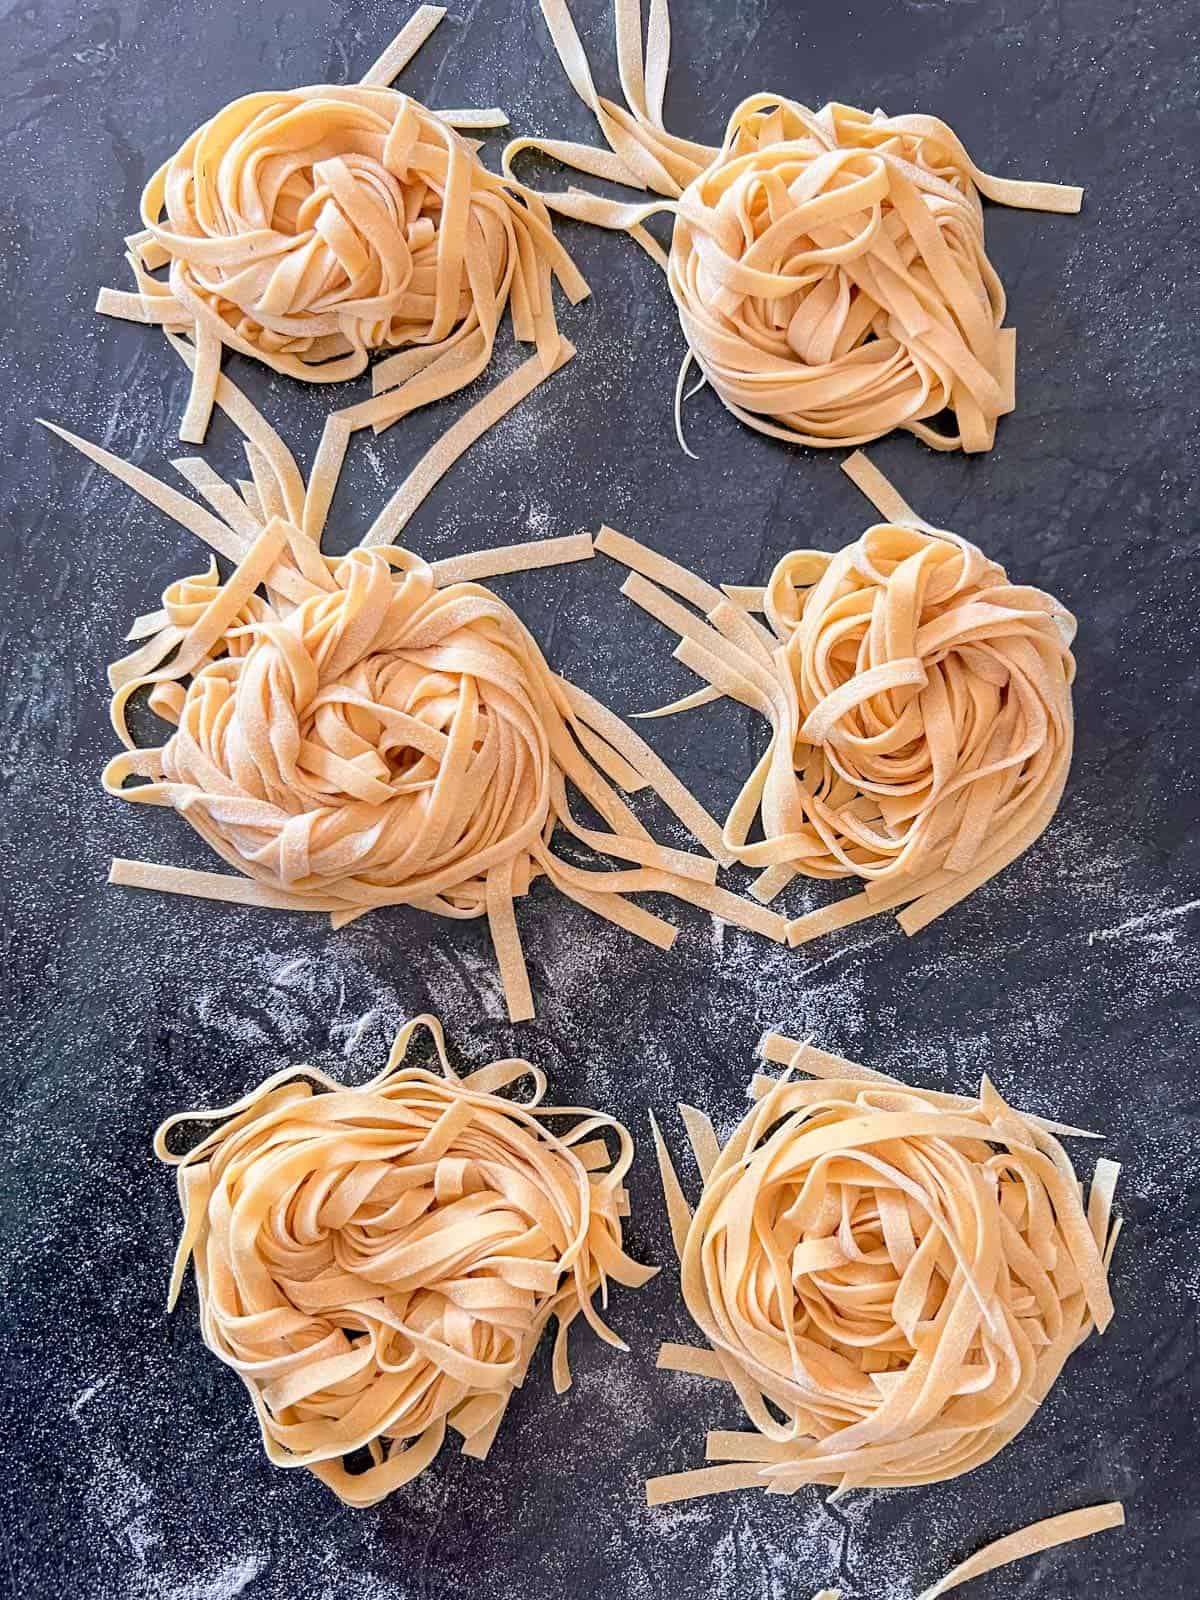 homemade pasta drying in nests